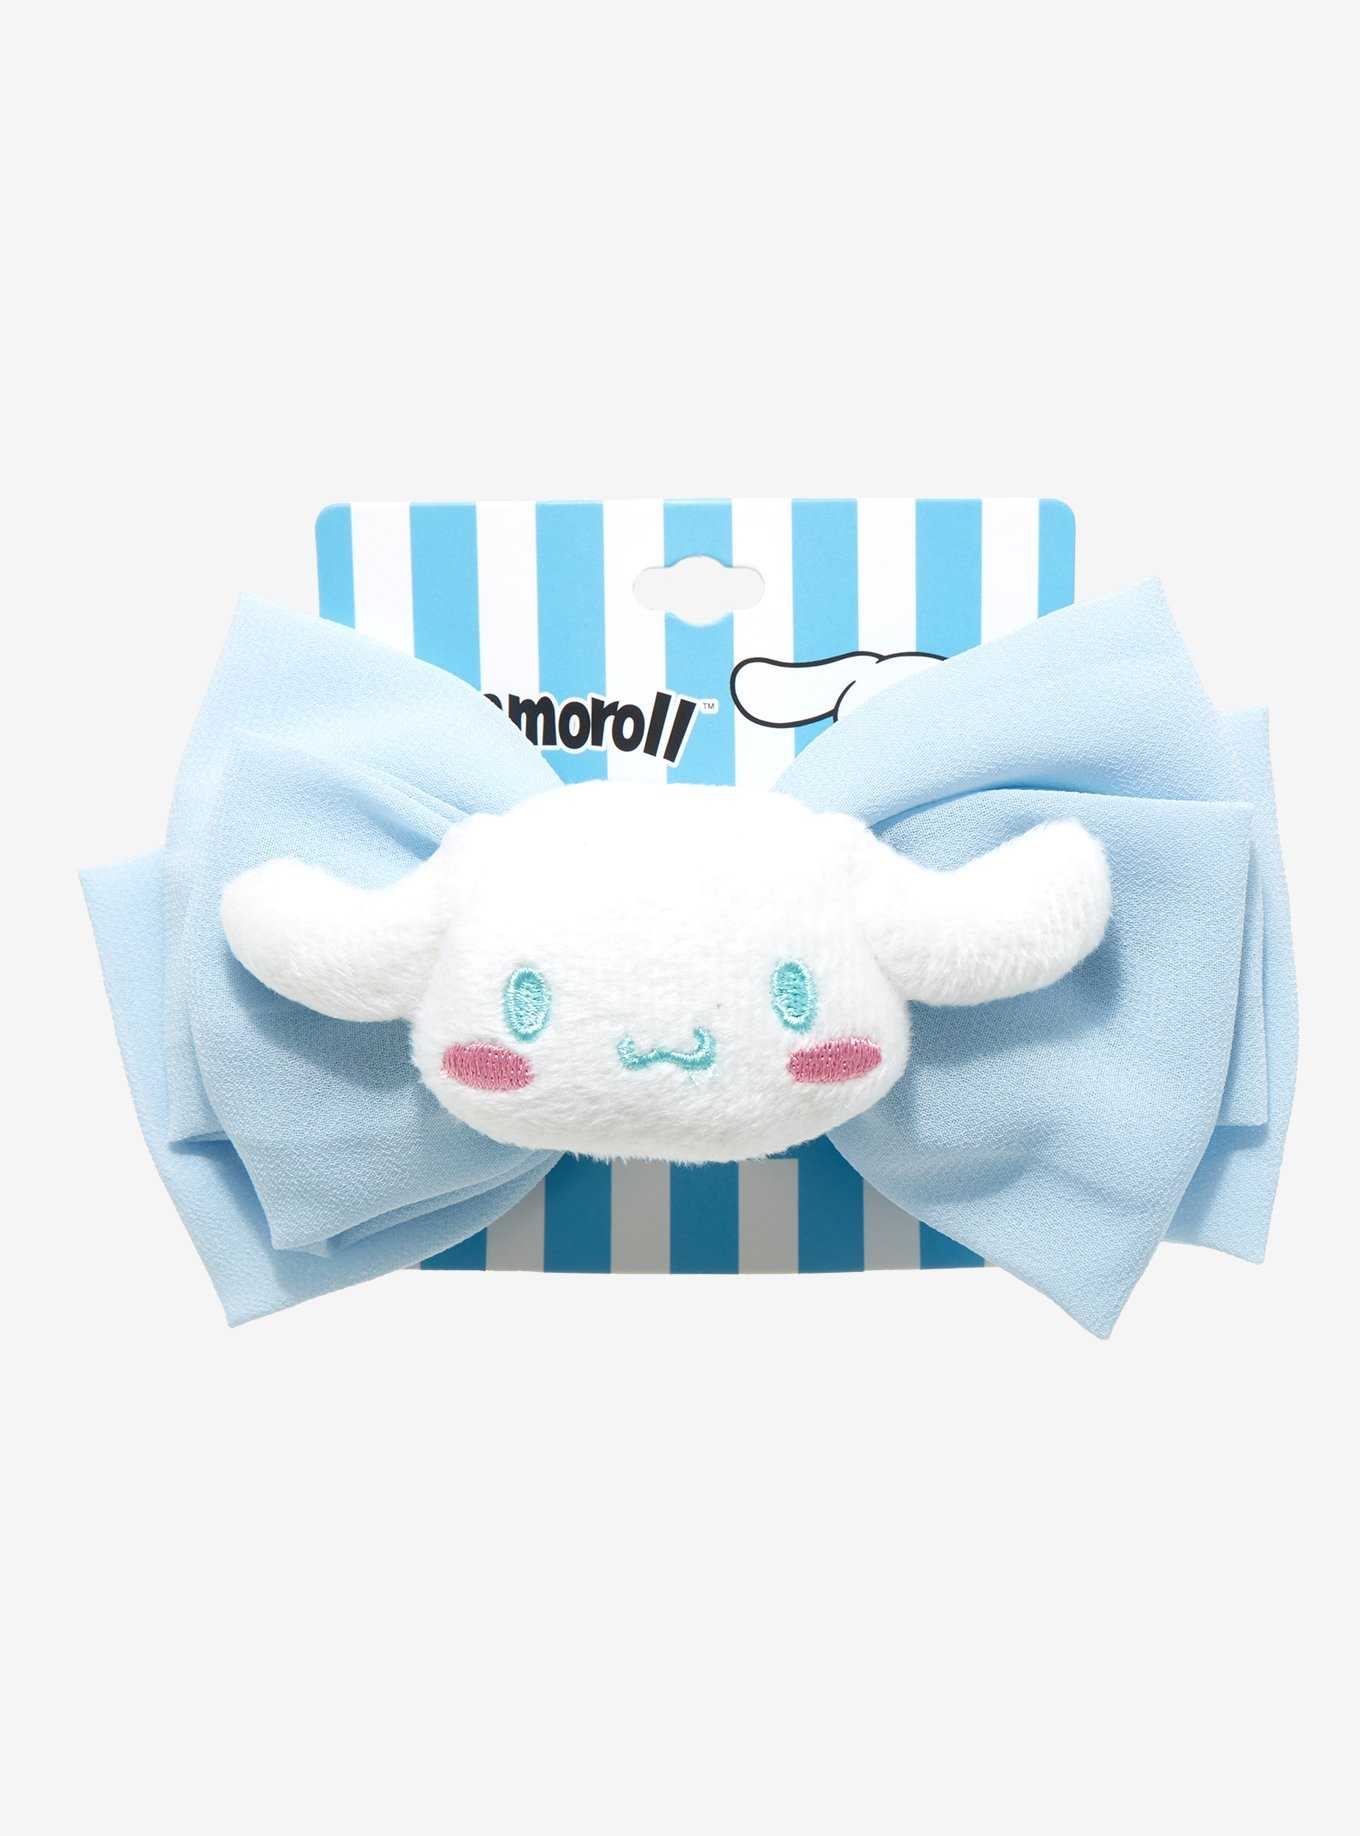 Sanrio Cinnamoroll bunny plushie – Grumpy Bunny